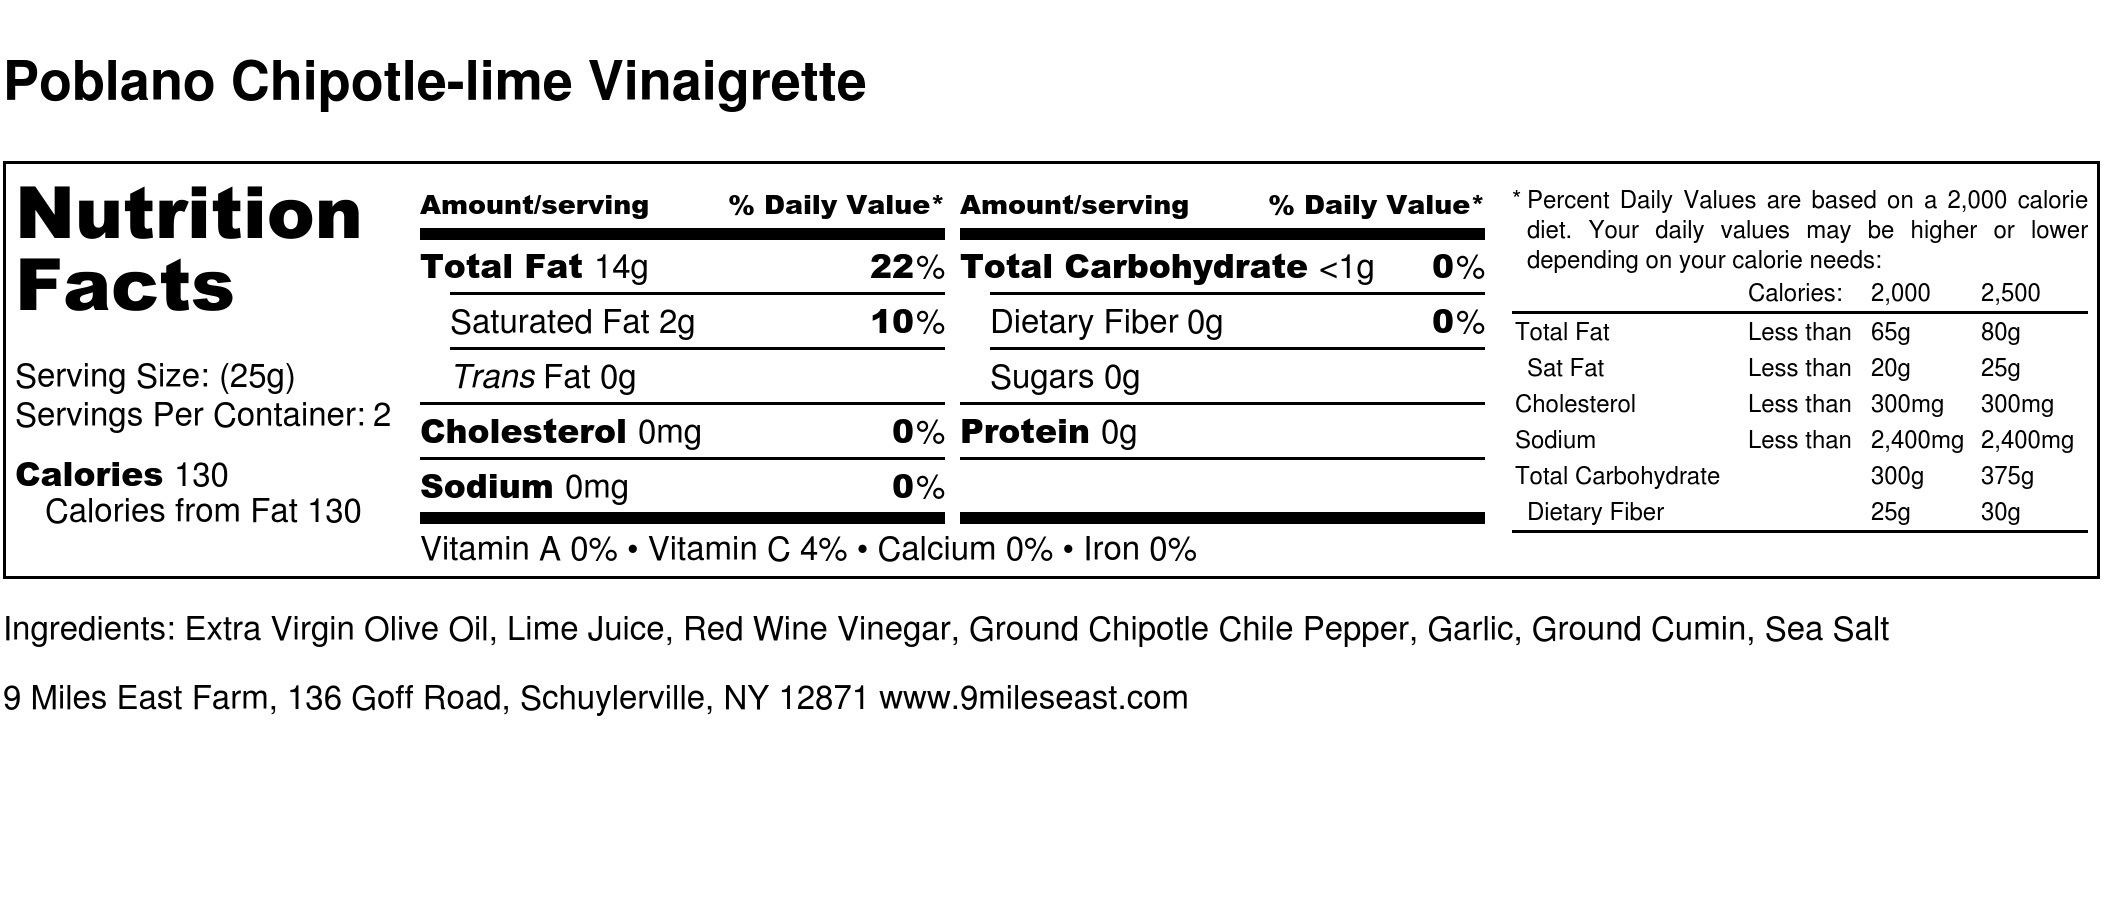 Poblano Chipotle-lime Vinaigrette - Nutrition Label.jpg